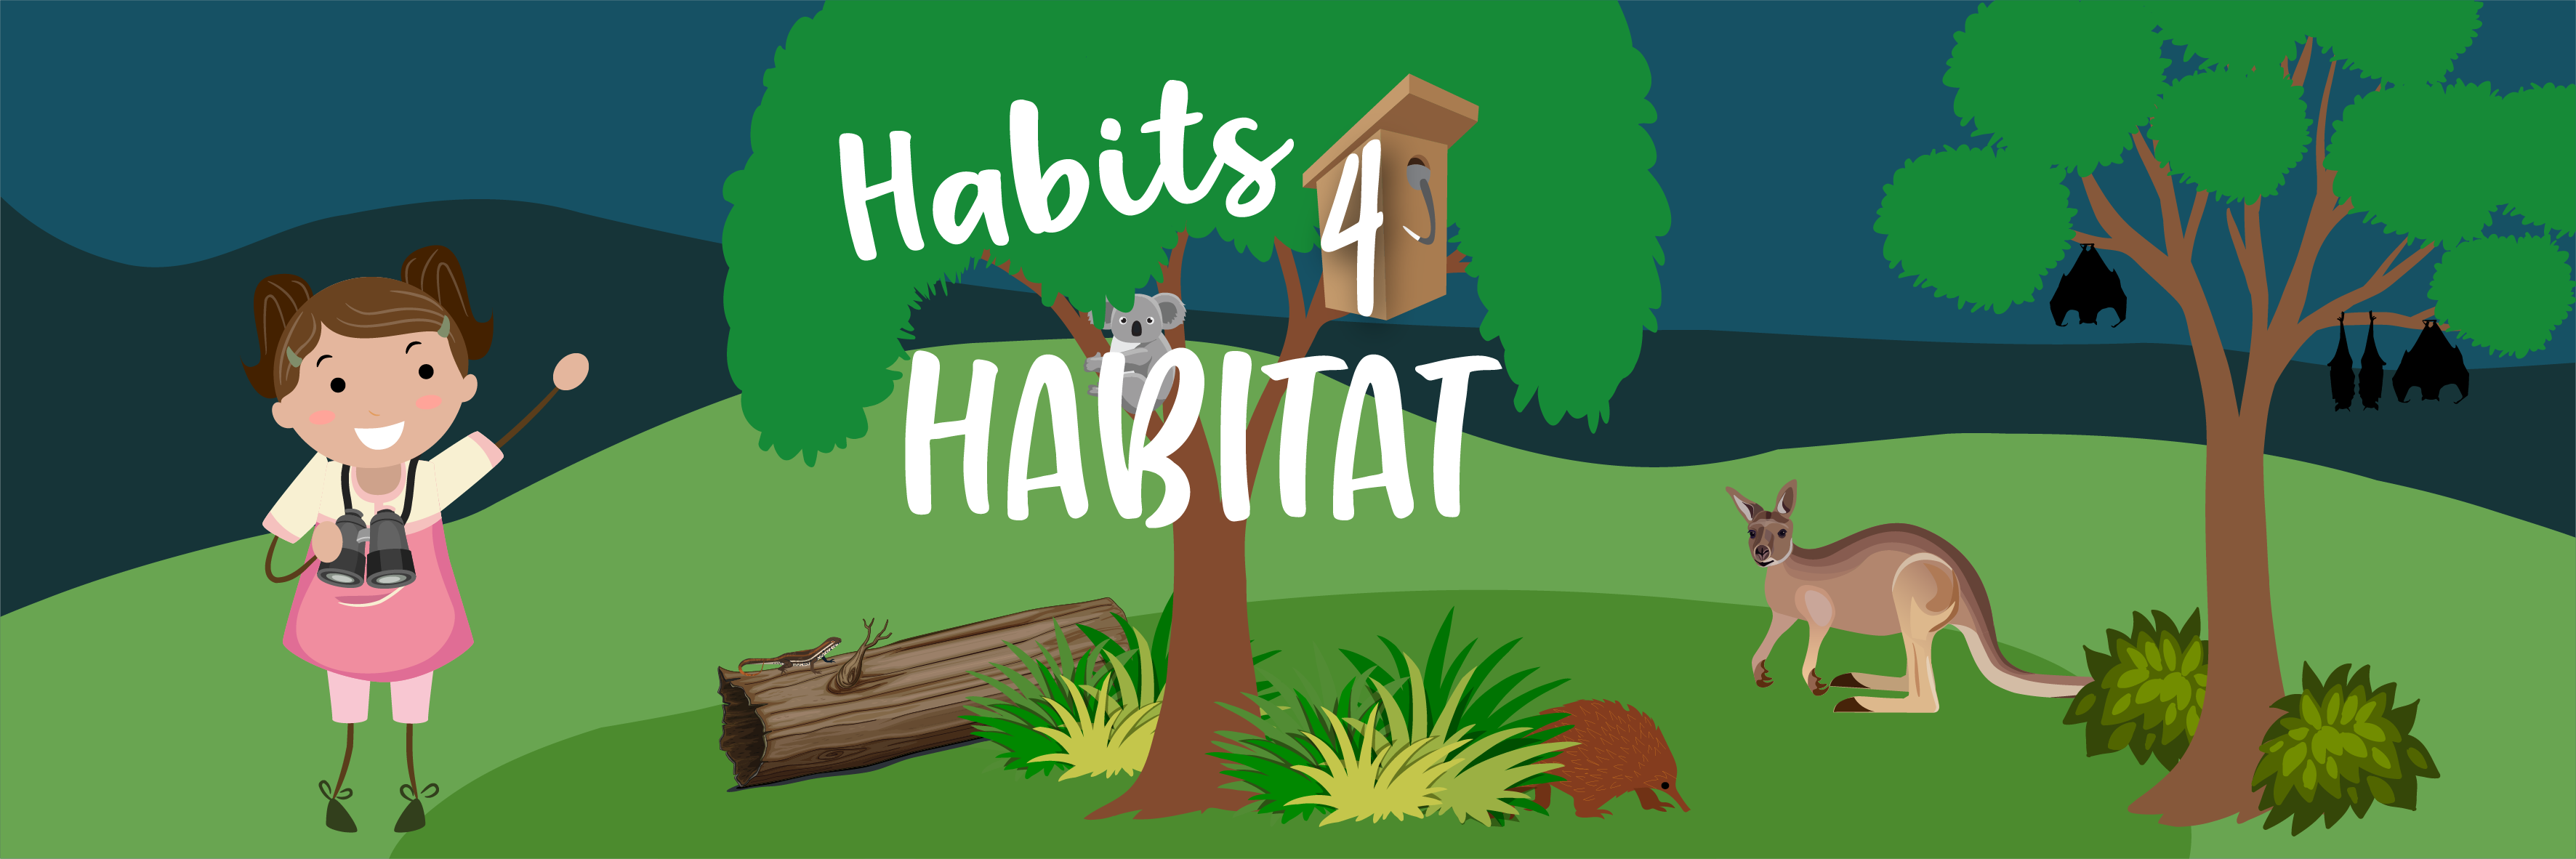 Habits for Habitat Banner